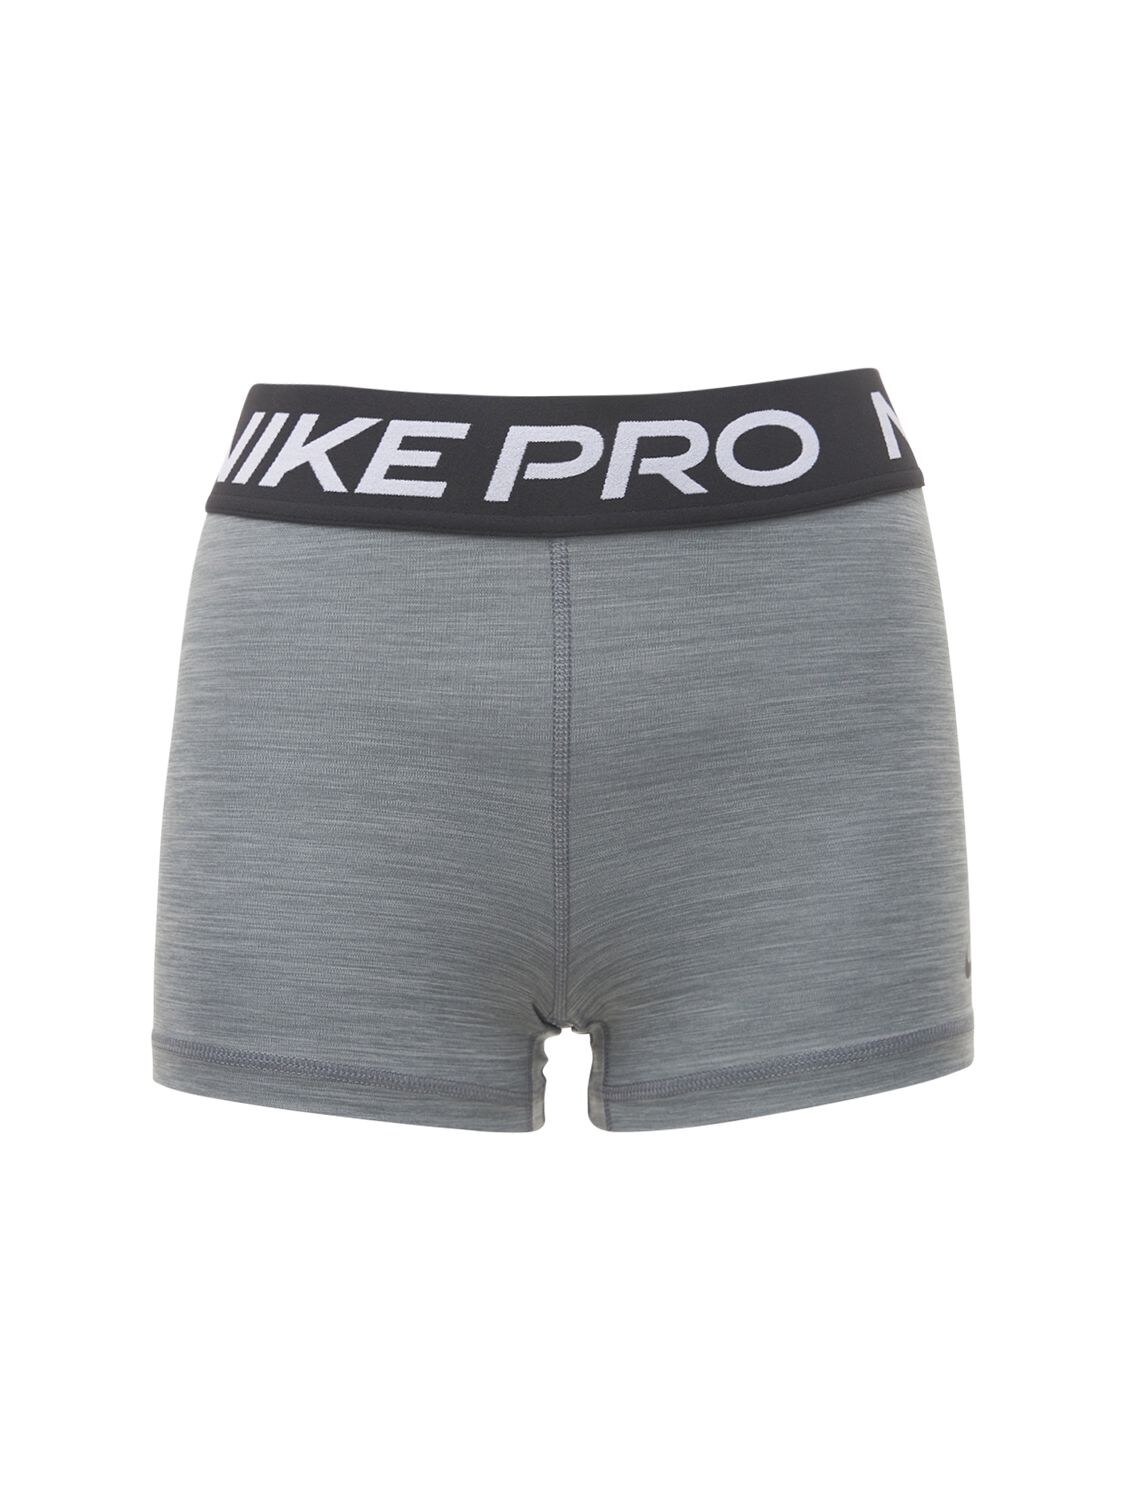 NIKE PRO短裤,73IDLC046-MDG00